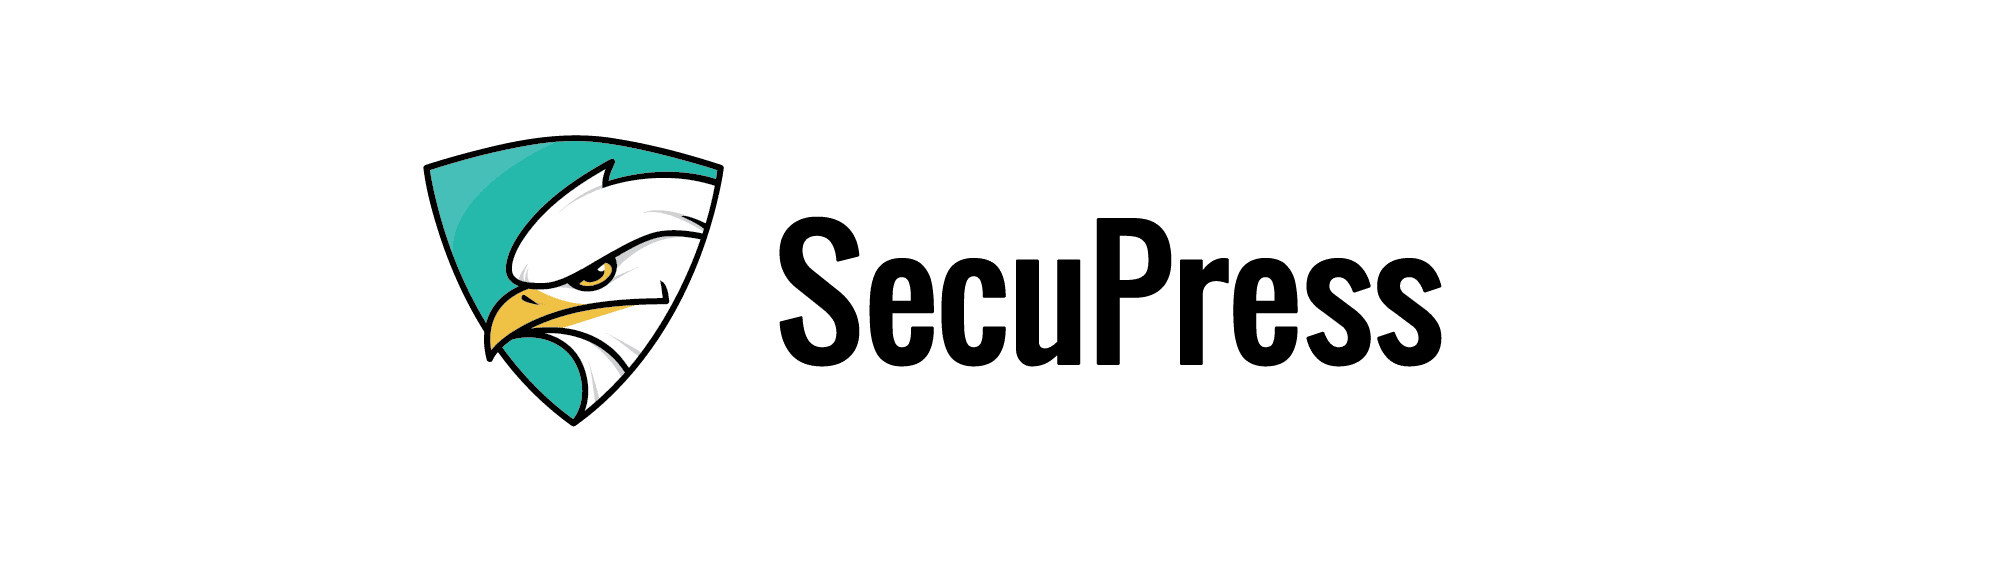 Logo SecuPress